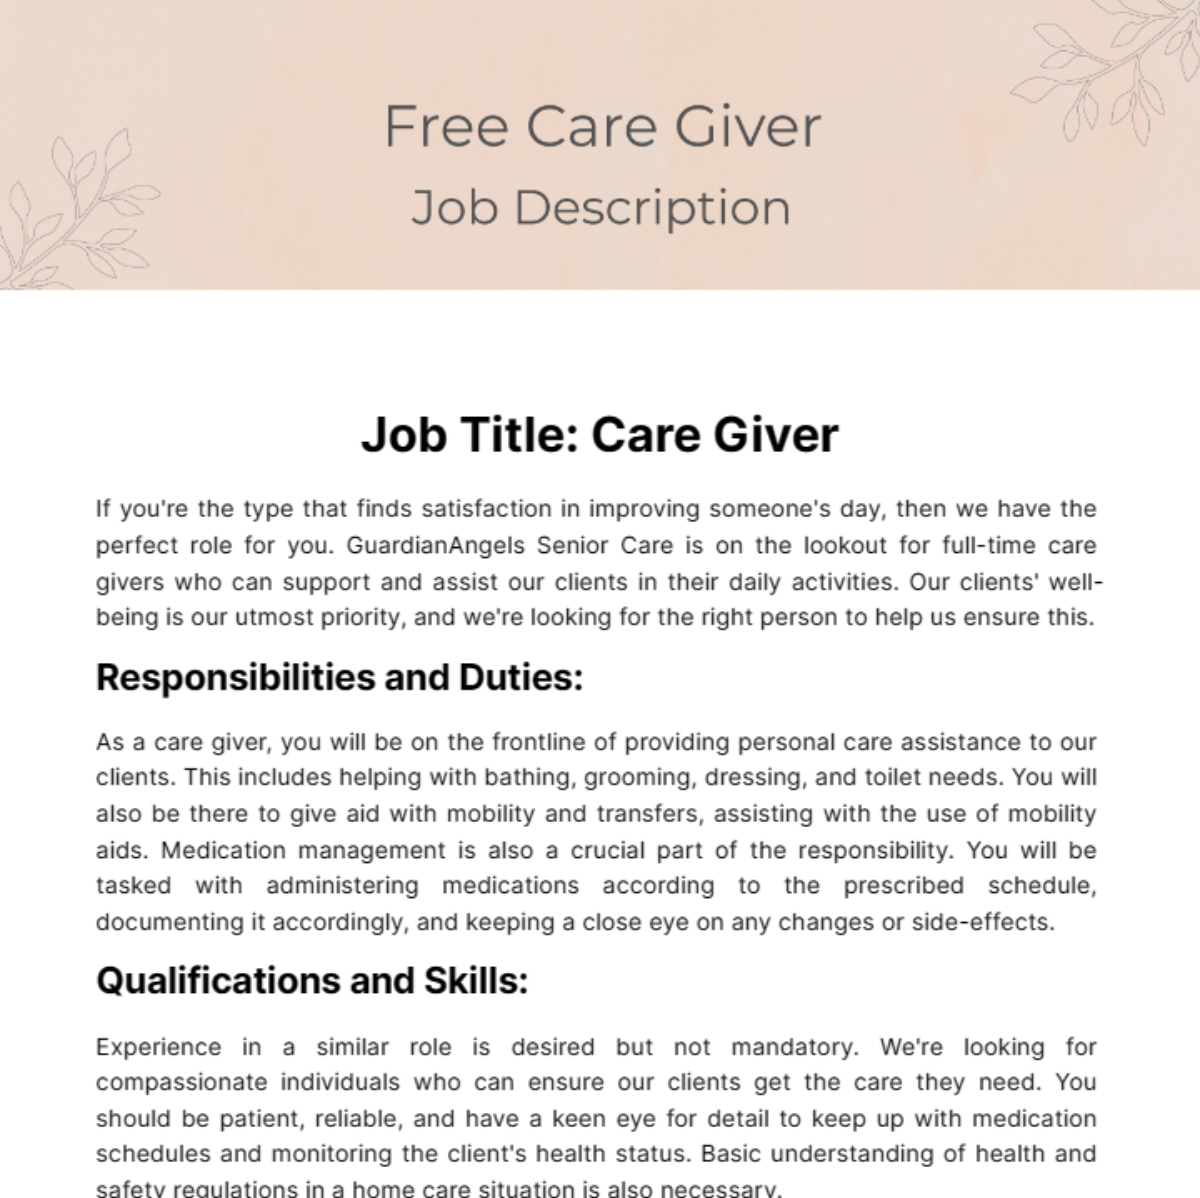 Free Care Giver Job Description Template